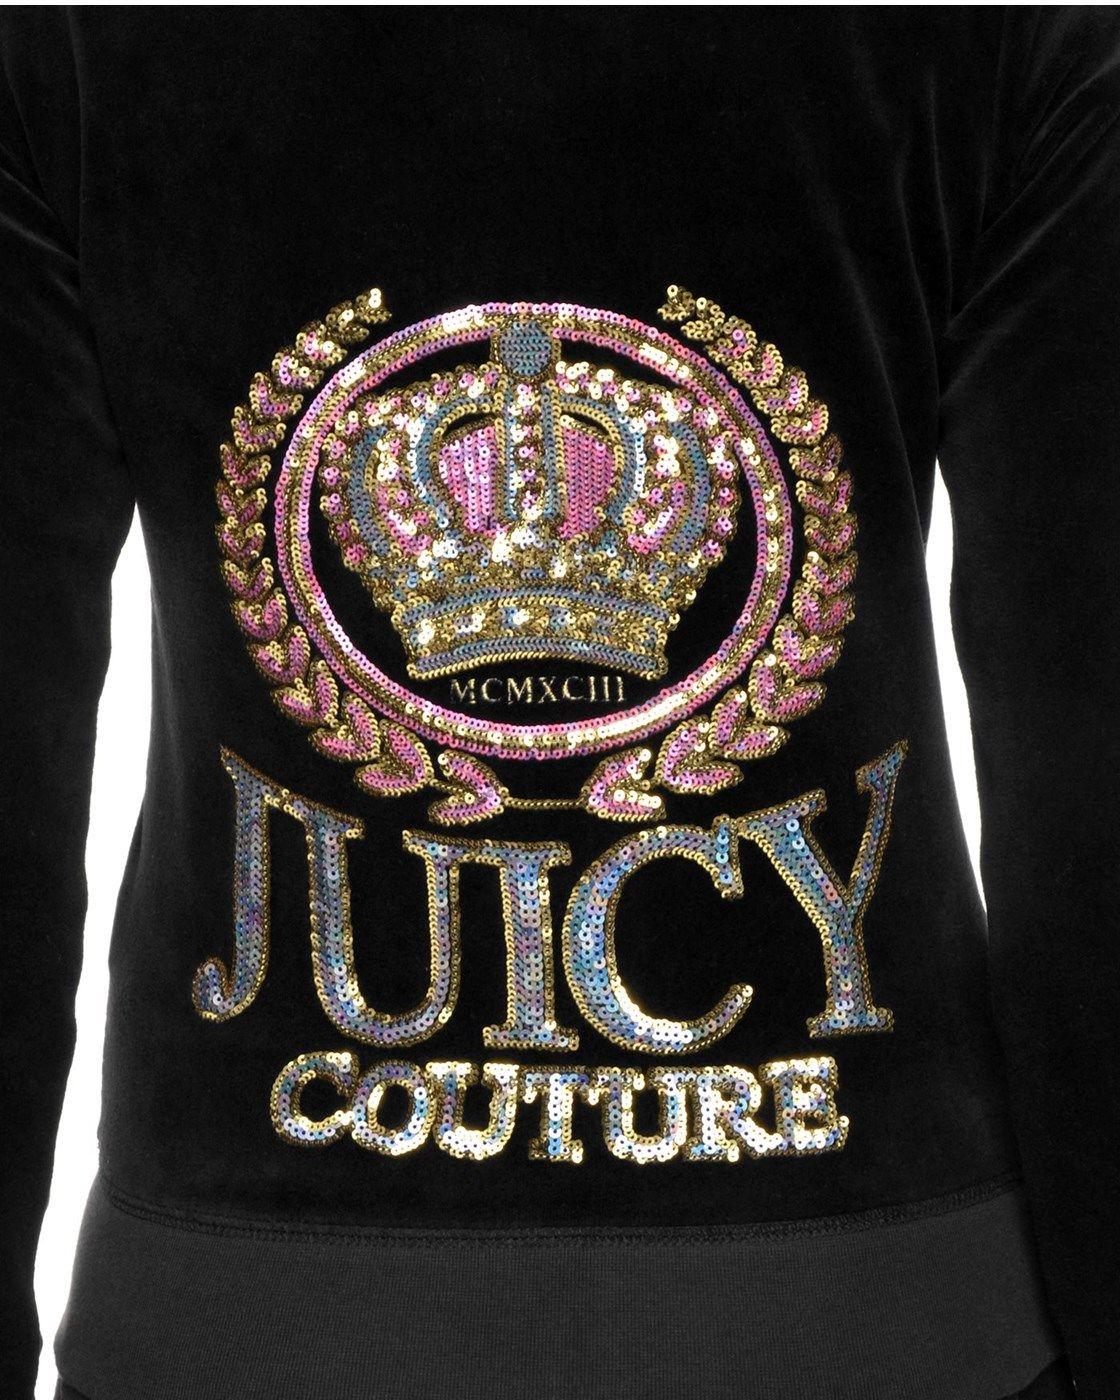 Couture Crown Logo - Logo Velour Juicy Couture Crown Original Jacket | Juicy Couture